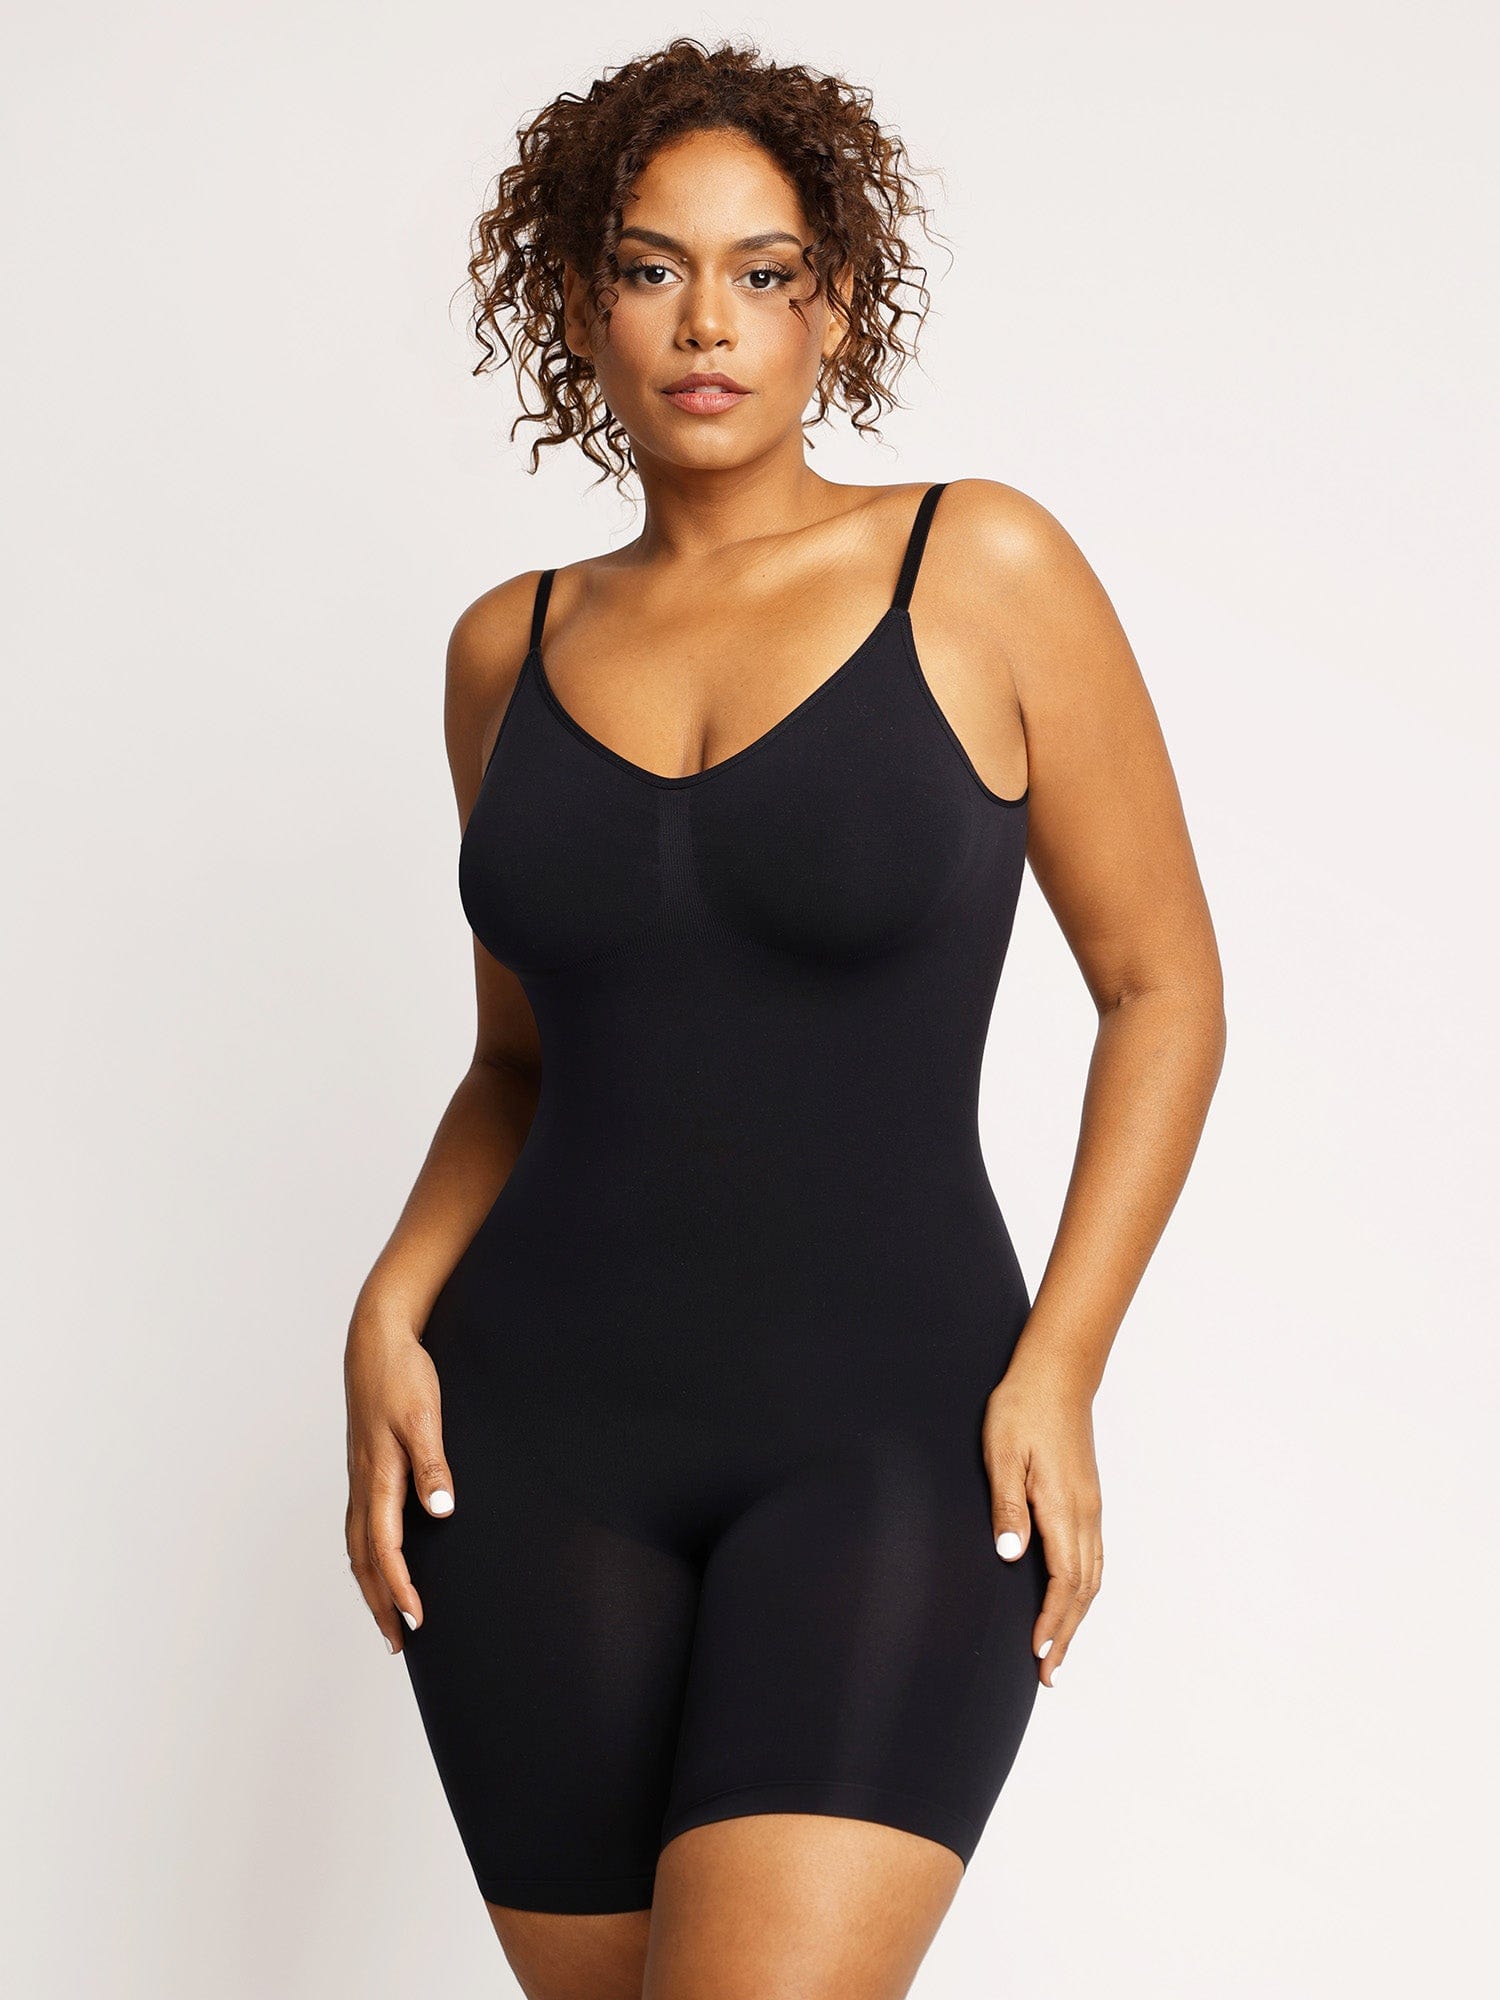 Buy Popilush Bodysuit for Women Tummy Control - Seamless Sculpting  Shapewear Full Body Shaper Butt Lift, Black-backless, M-L at